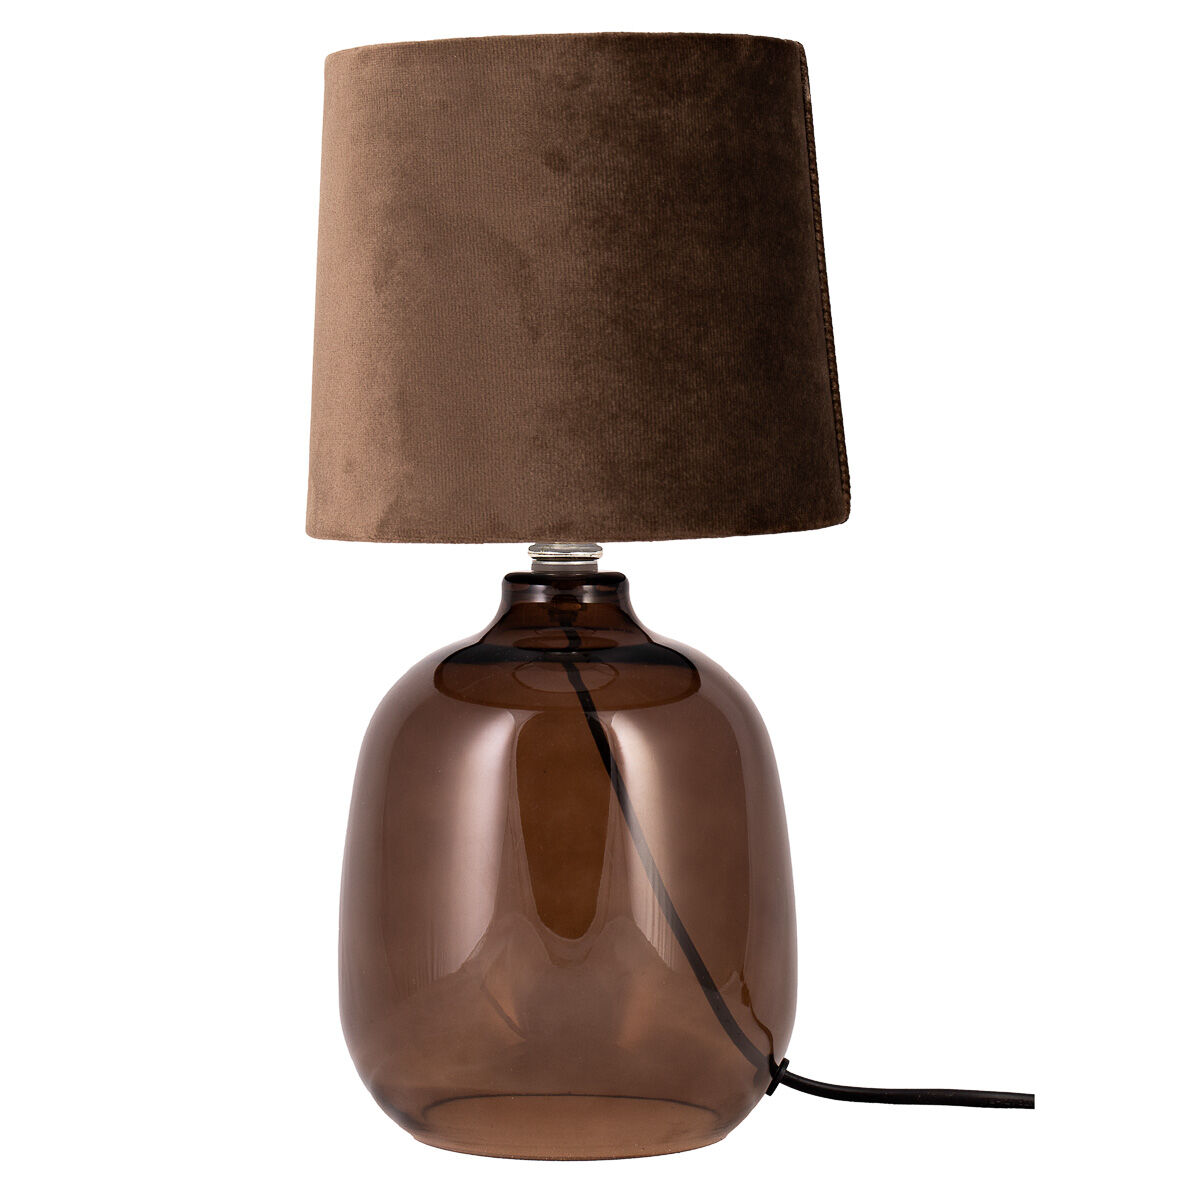 Standard produsent Lampe Roma brun